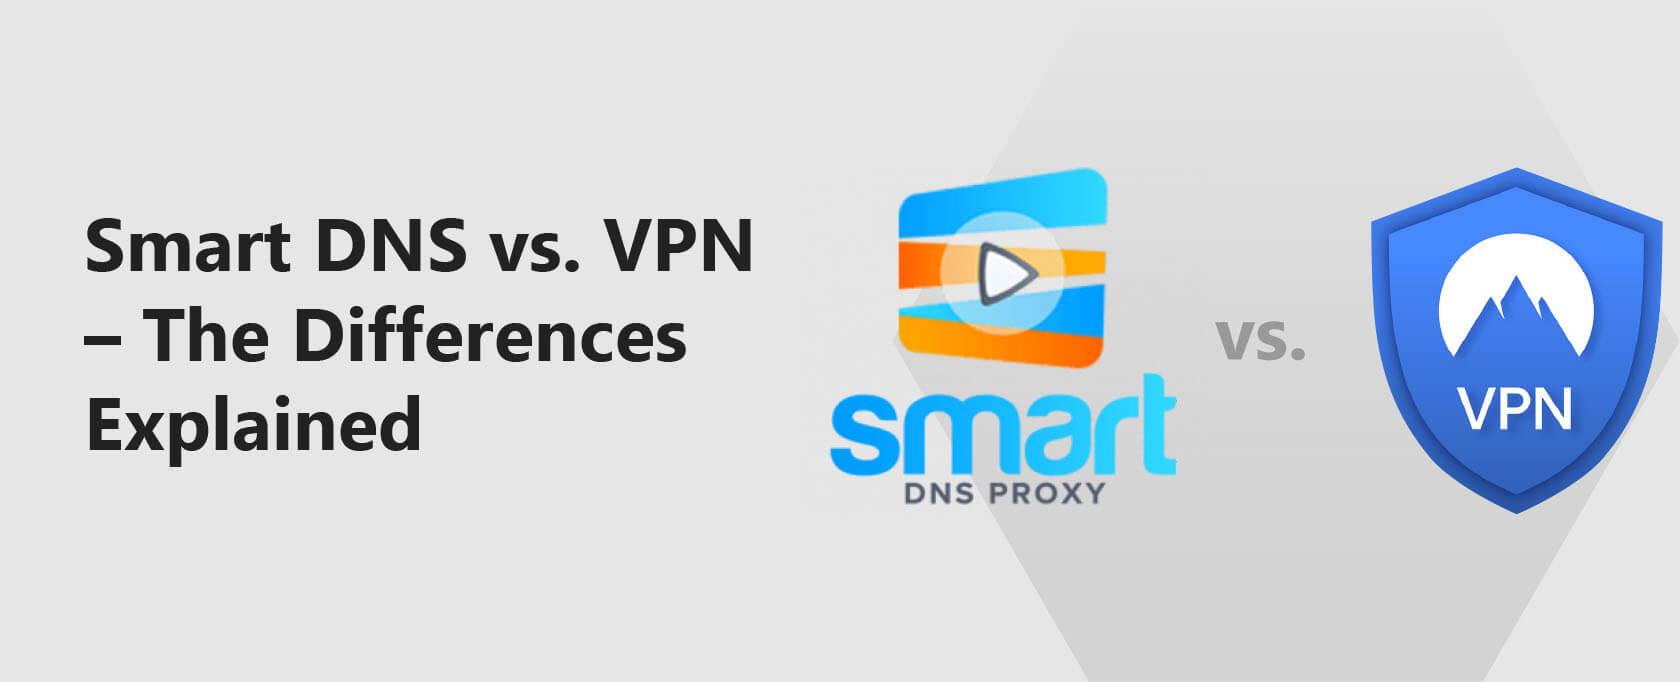 Smart DNS vs. VPN